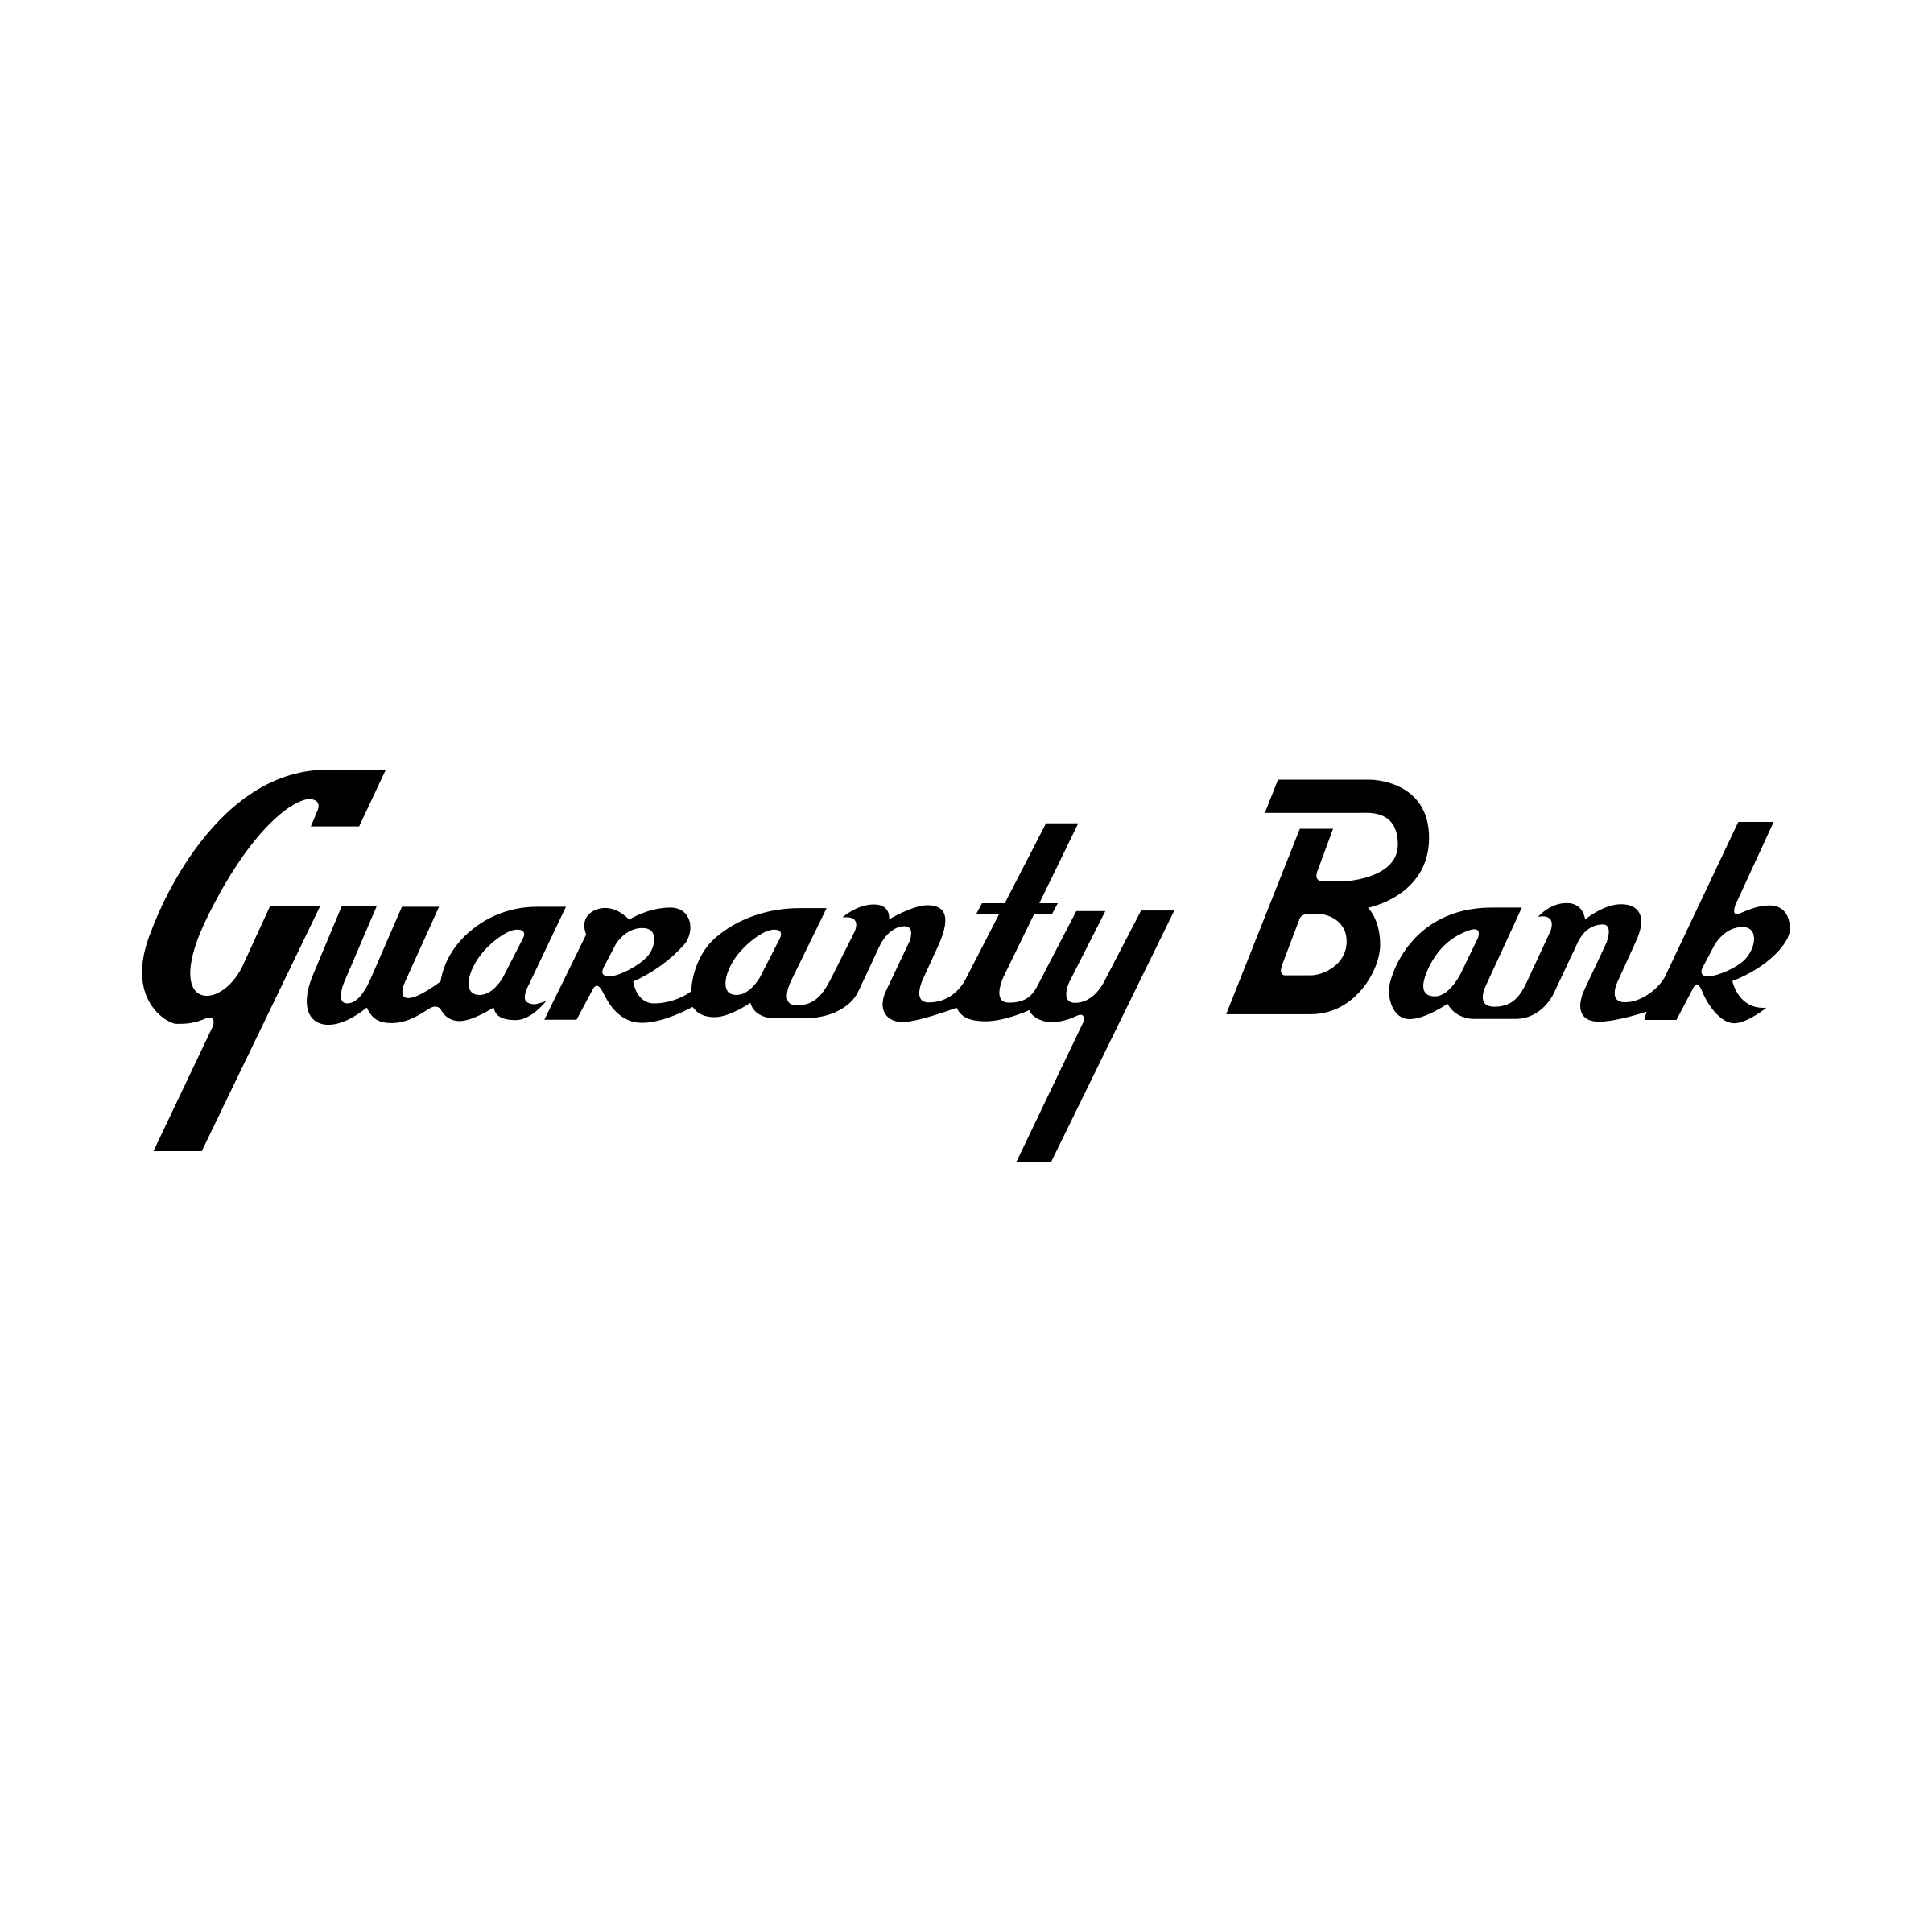 Www.guarantybank.com Logo - Guaranty Bank Logo PNG Transparent & SVG Vector